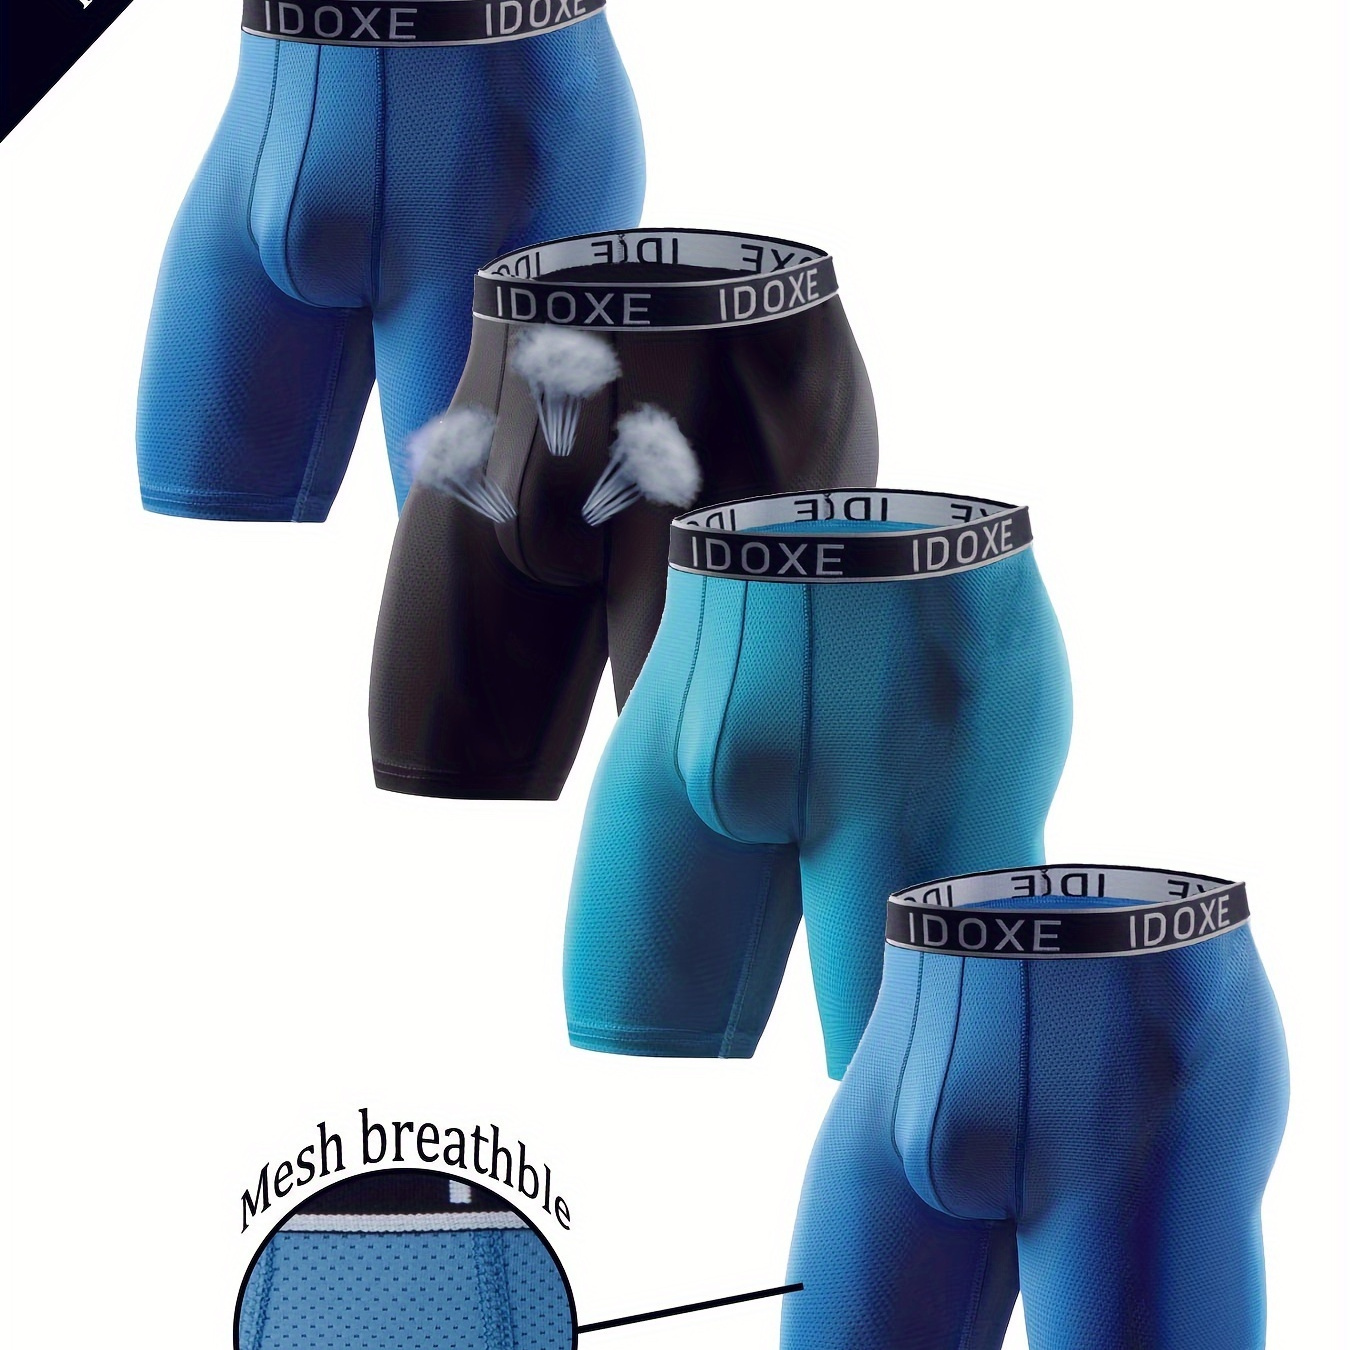 

4pcs Plus Size Men's Mesh Breathable Quick-drying Soft And Comfortable Long Boxer Brief Shorts, Multicolor Set